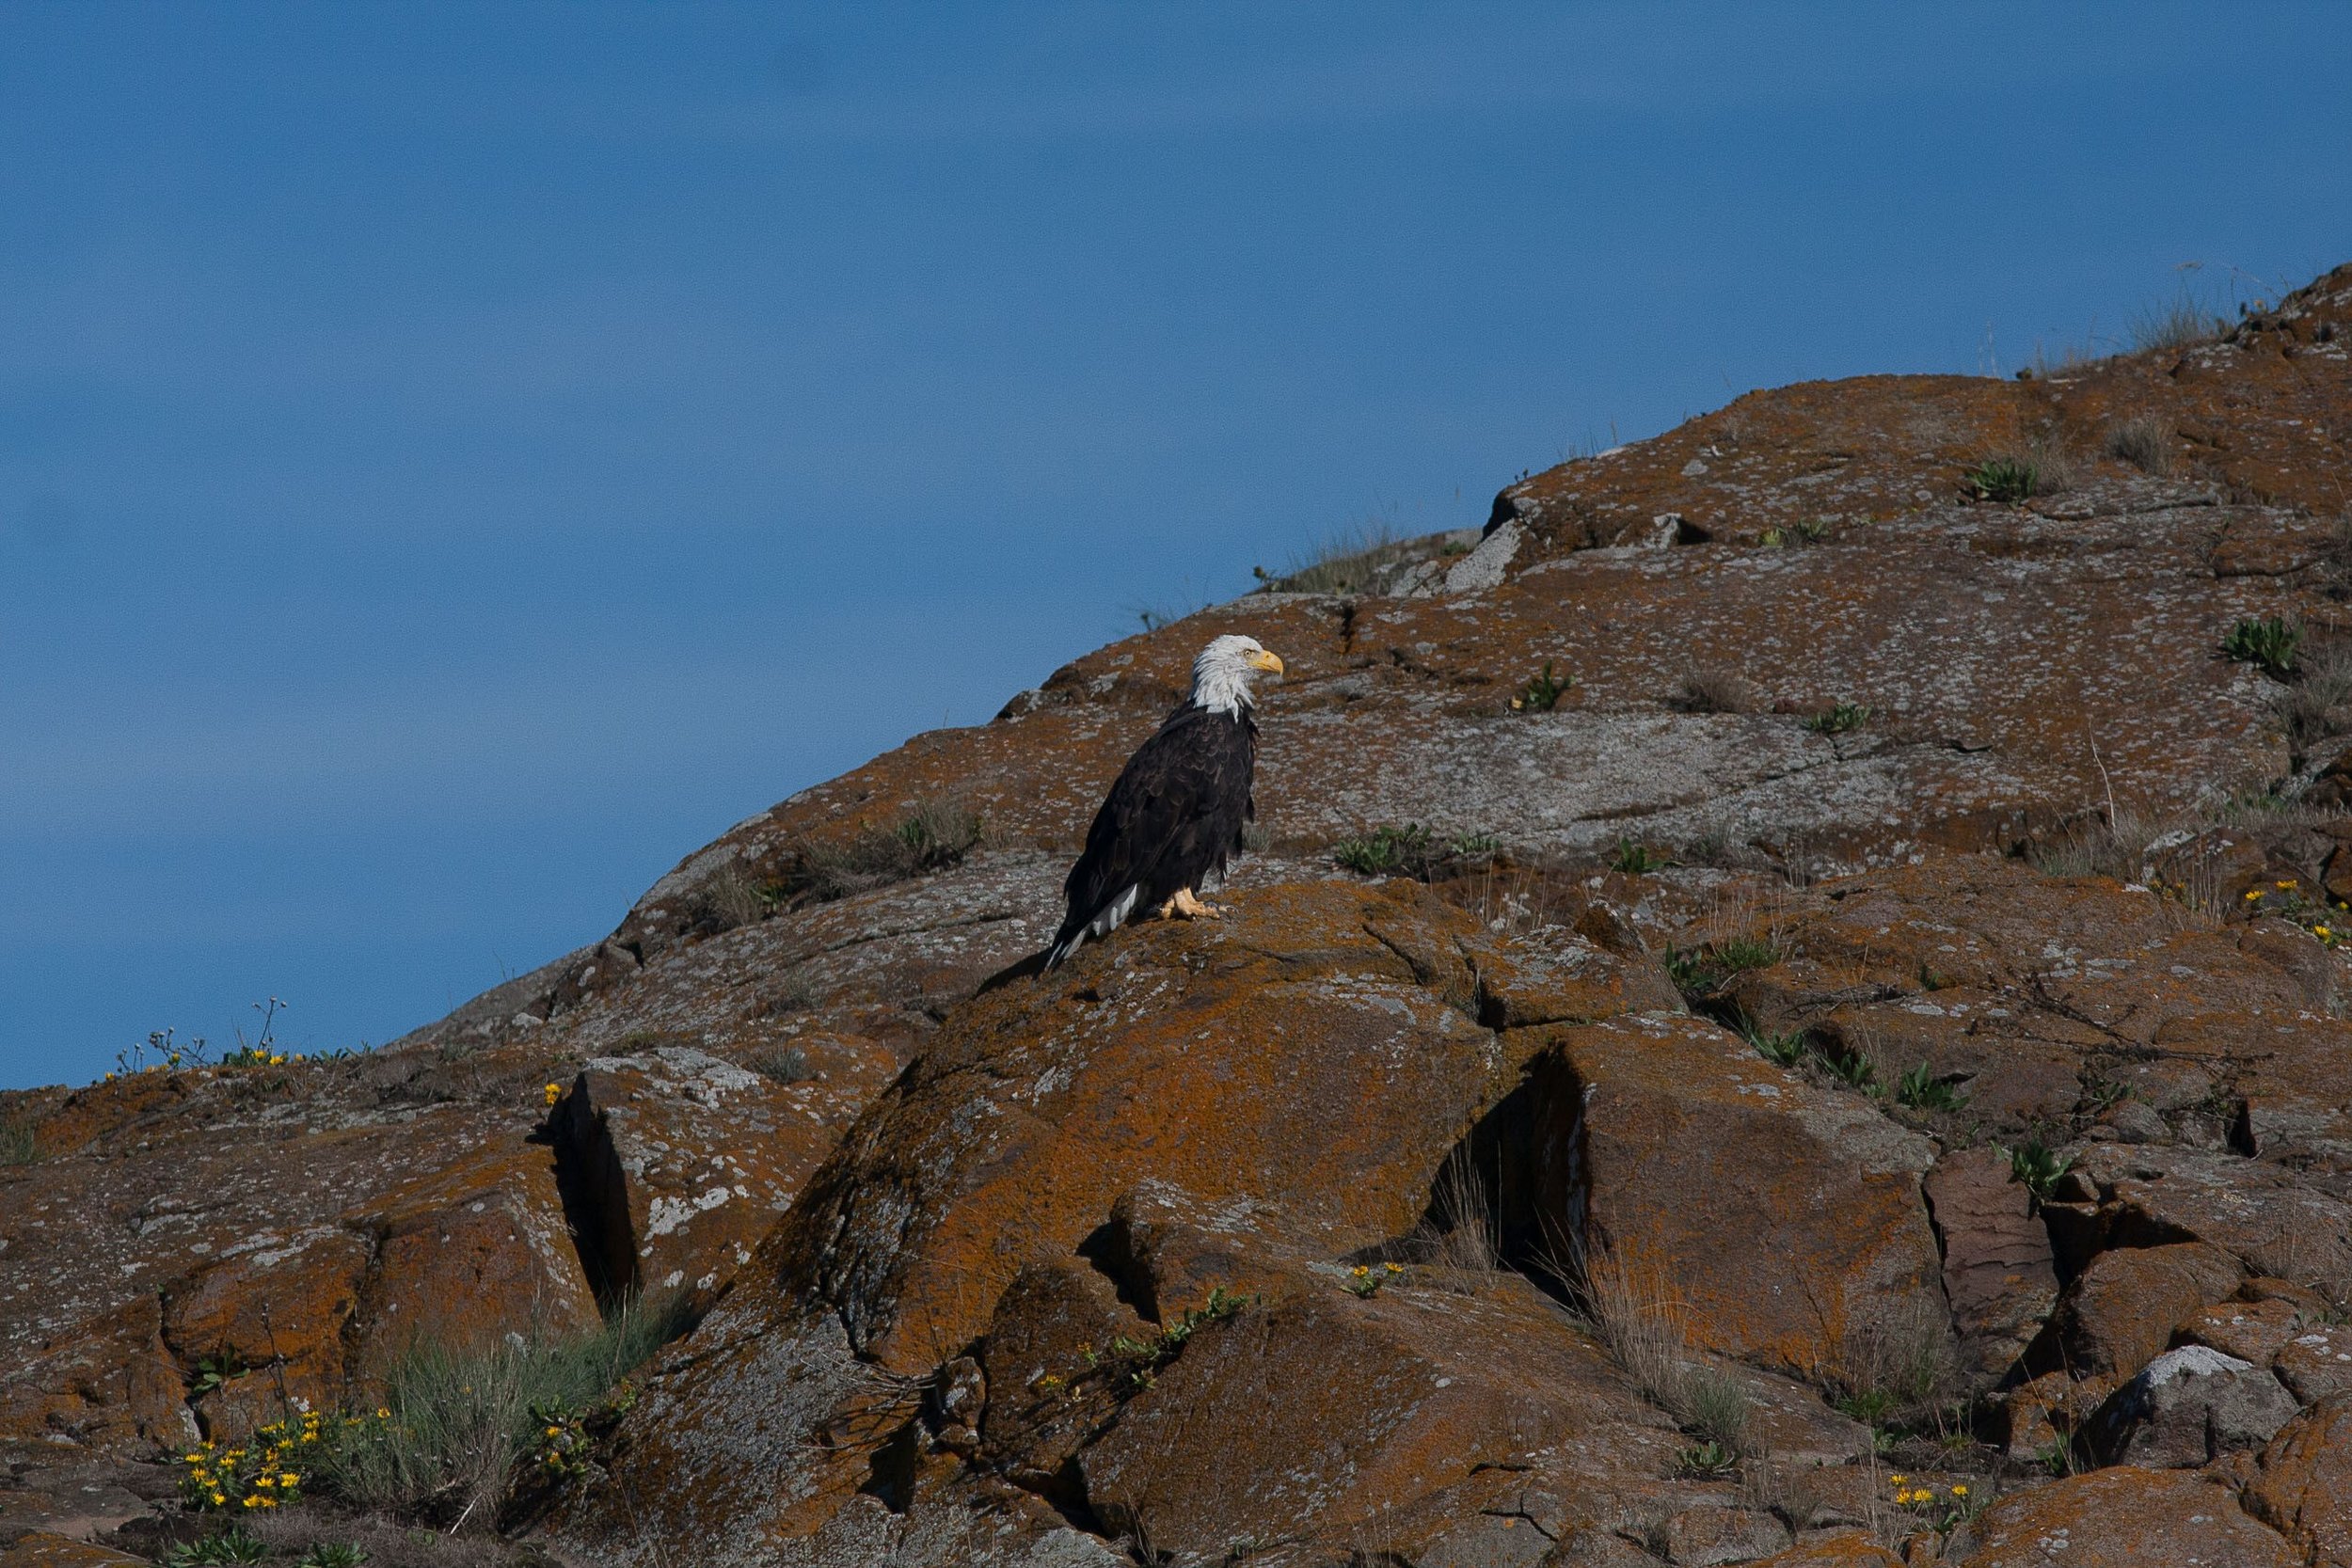   Bald eagle on Deadman Island  